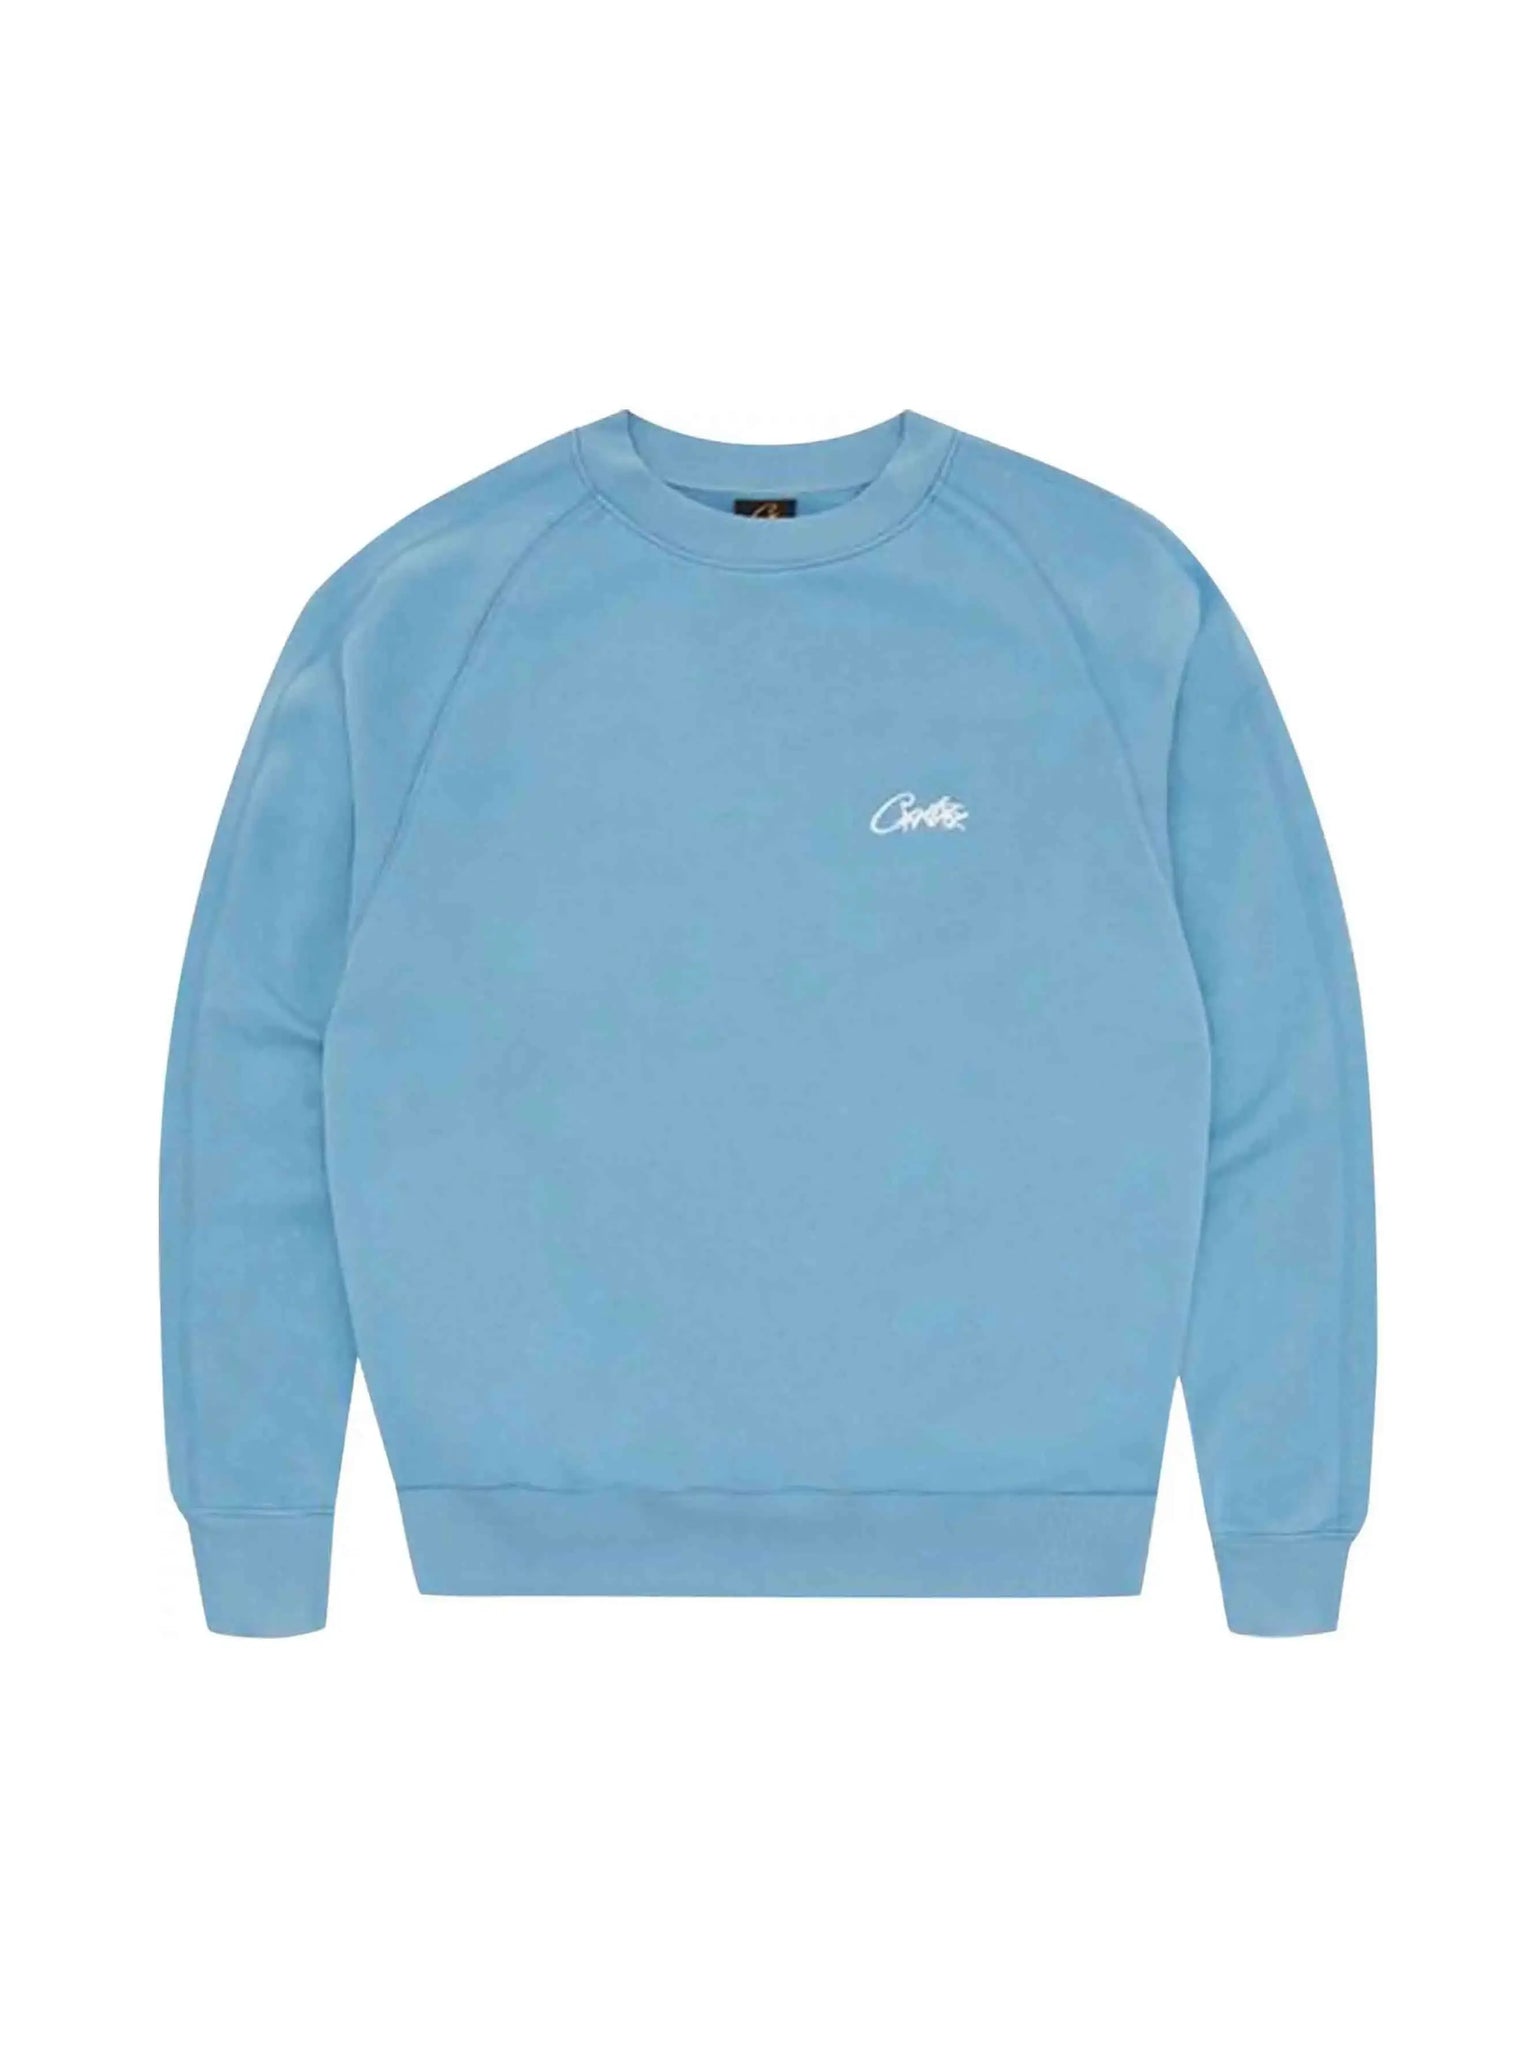 Corteiz HMP V2 Sweatshirt Baby Blue in Auckland, New Zealand - Shop name